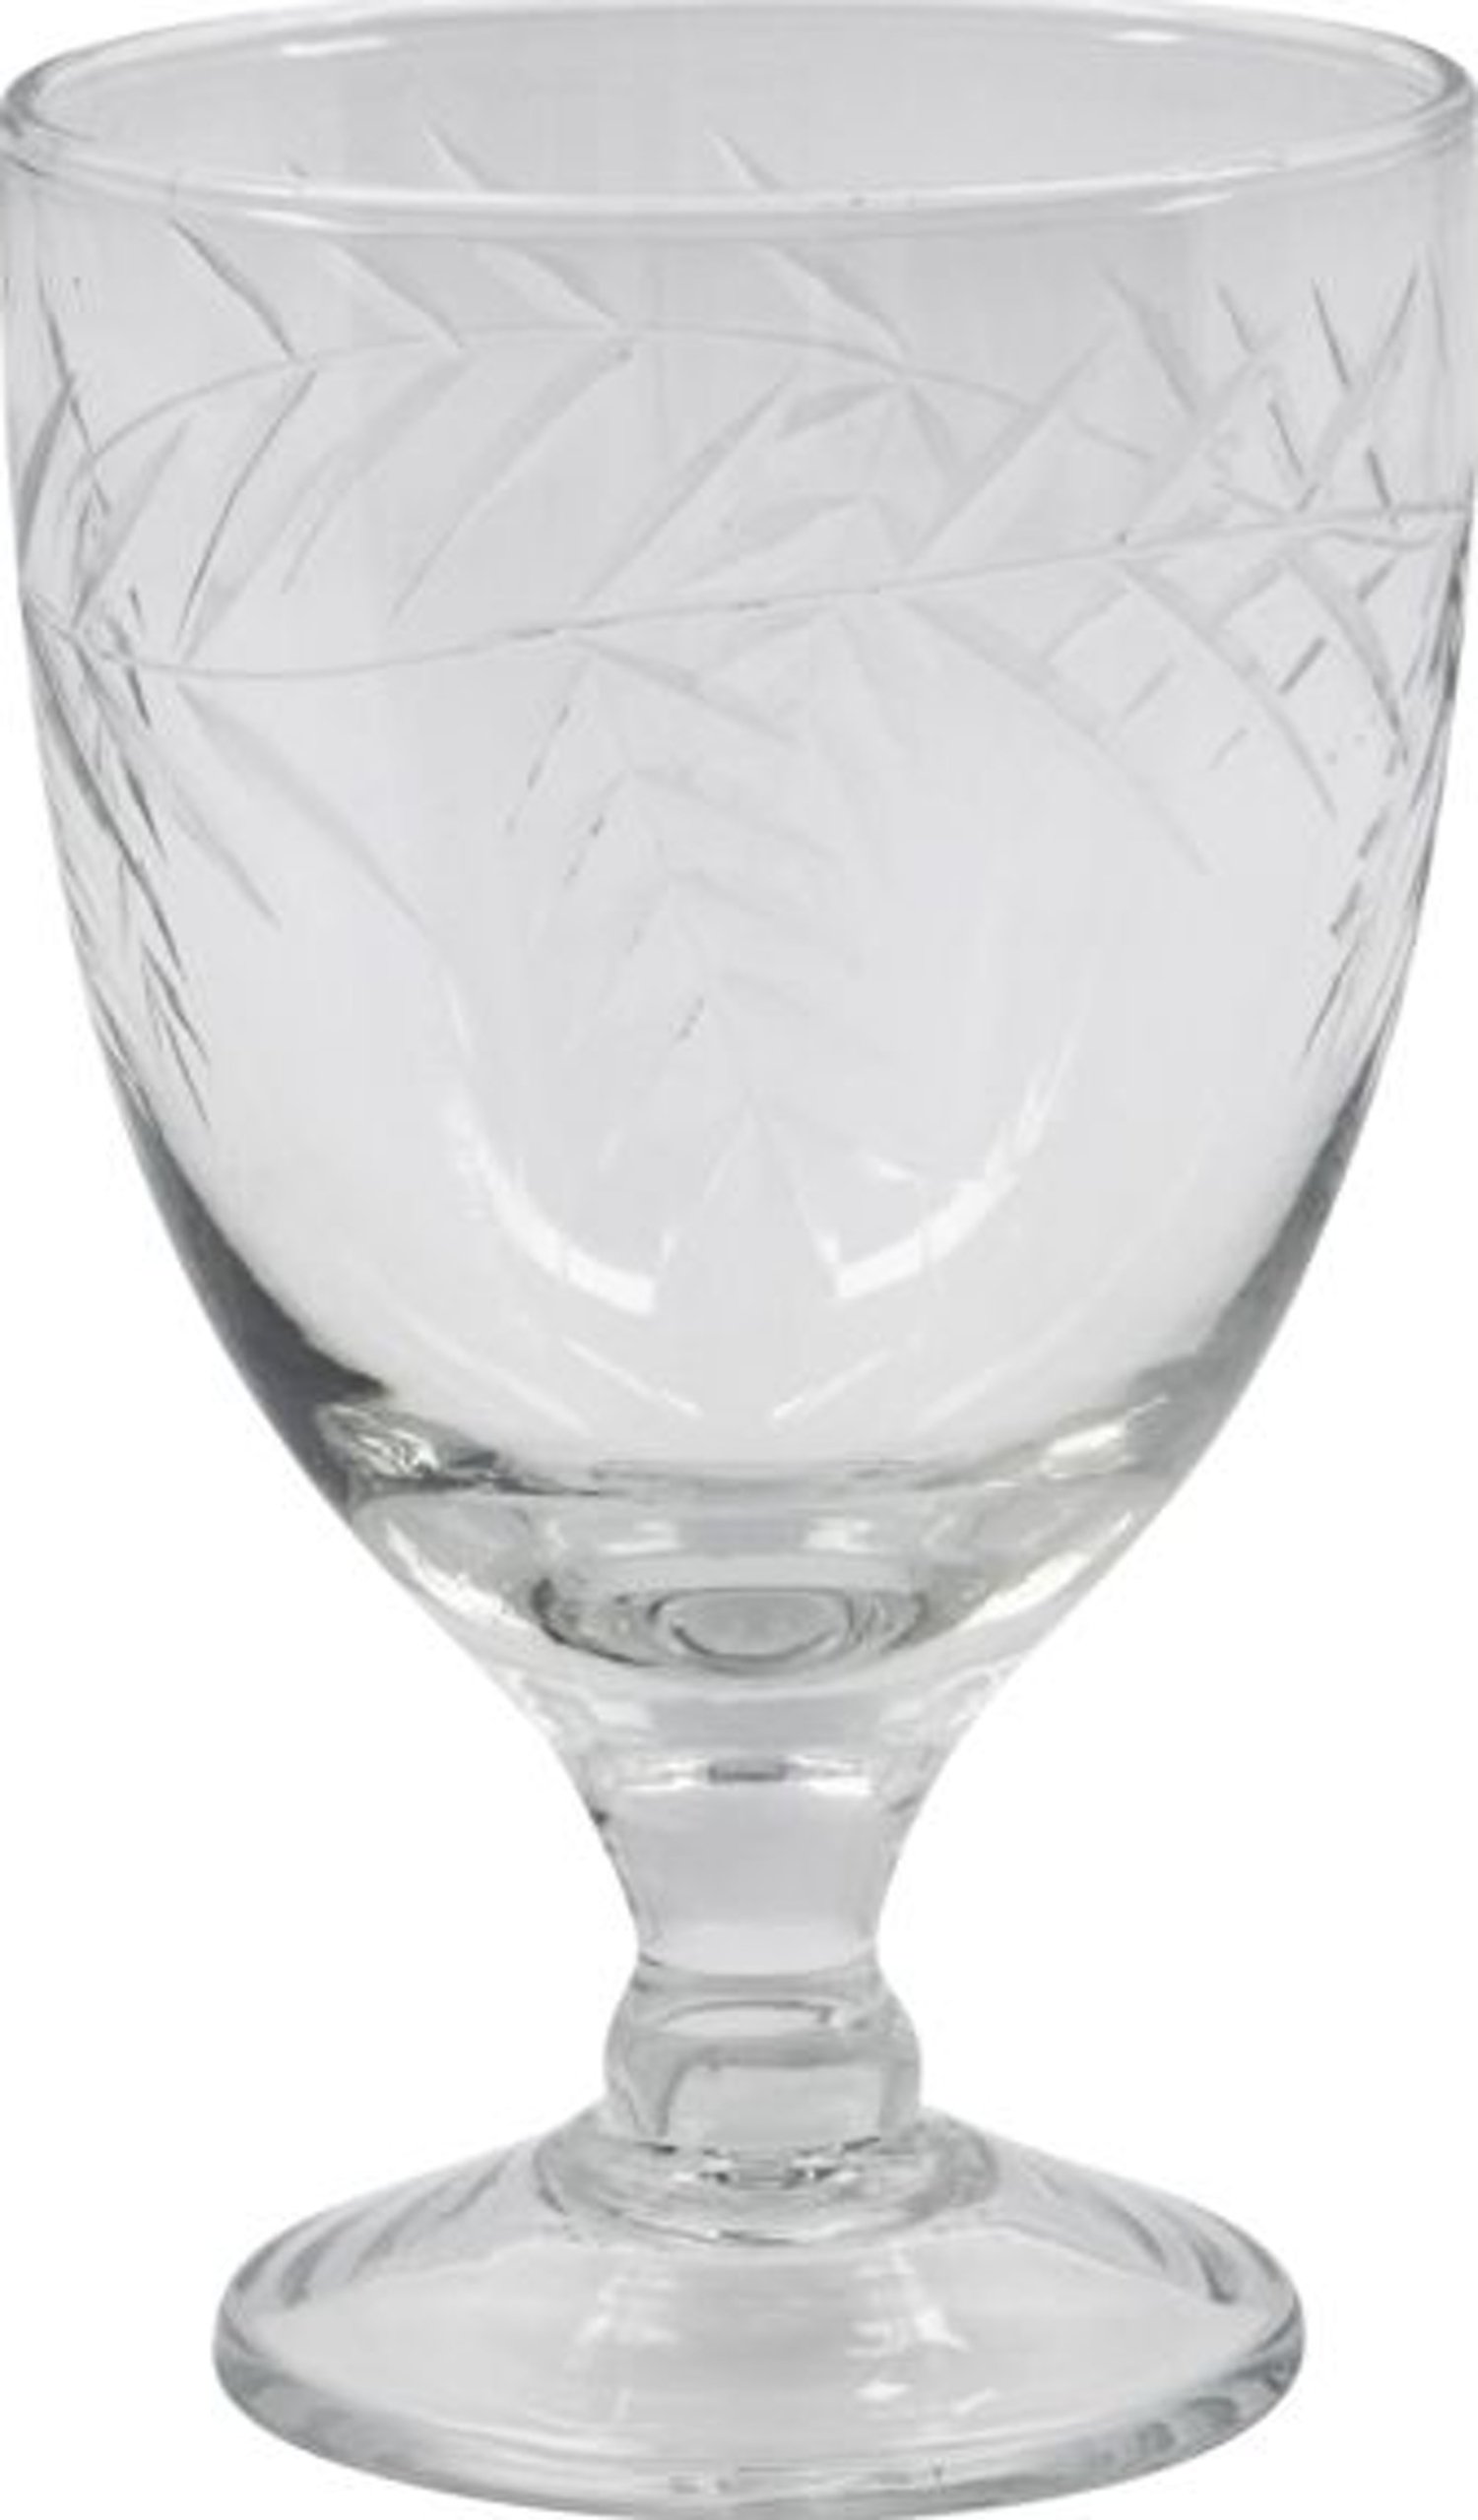 2: Crys, Cocktailglas by House Doctor (D: 8 cm. x H: 13 cm., Klar)